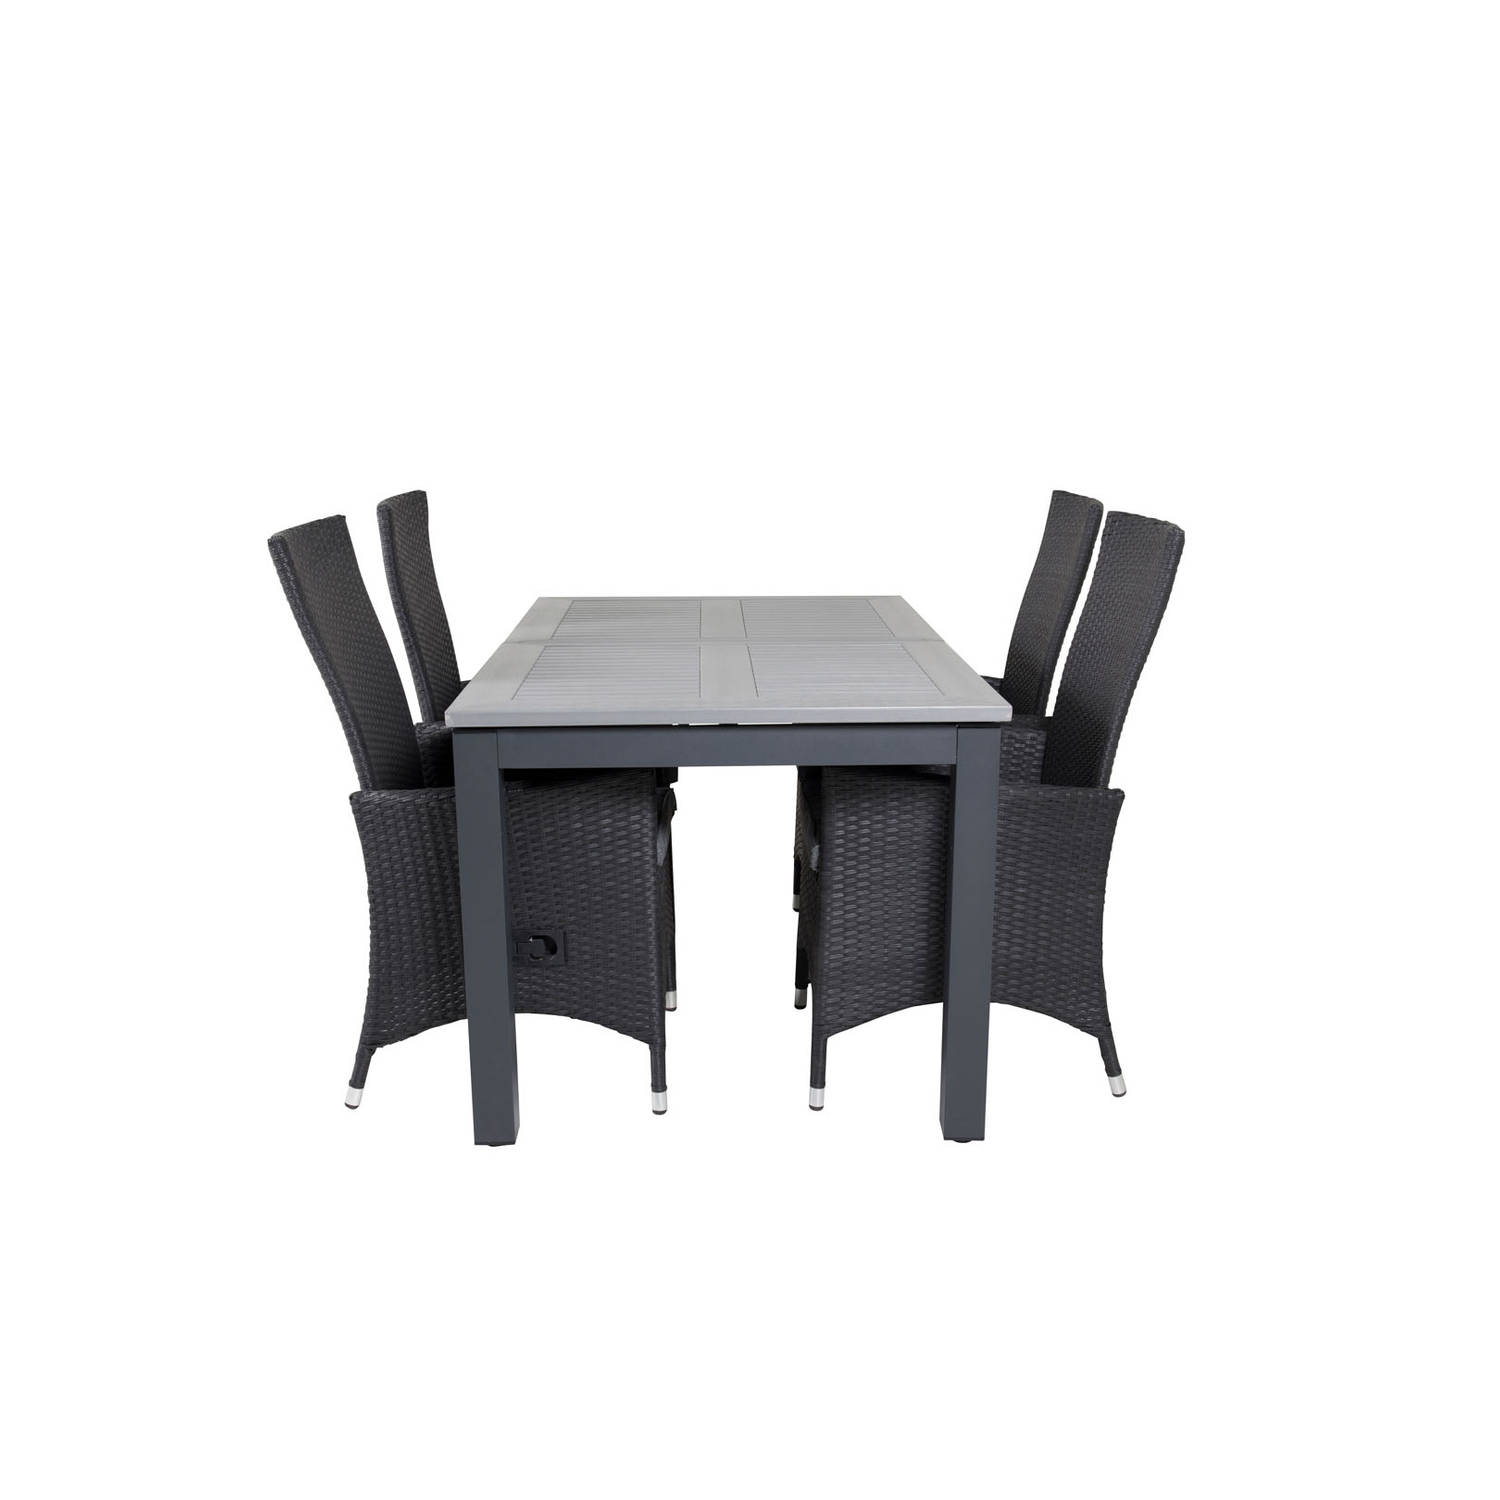 Albany tuinmeubelset tafel 100x160/240cm en 4 stoel Padova zwart, grijs.